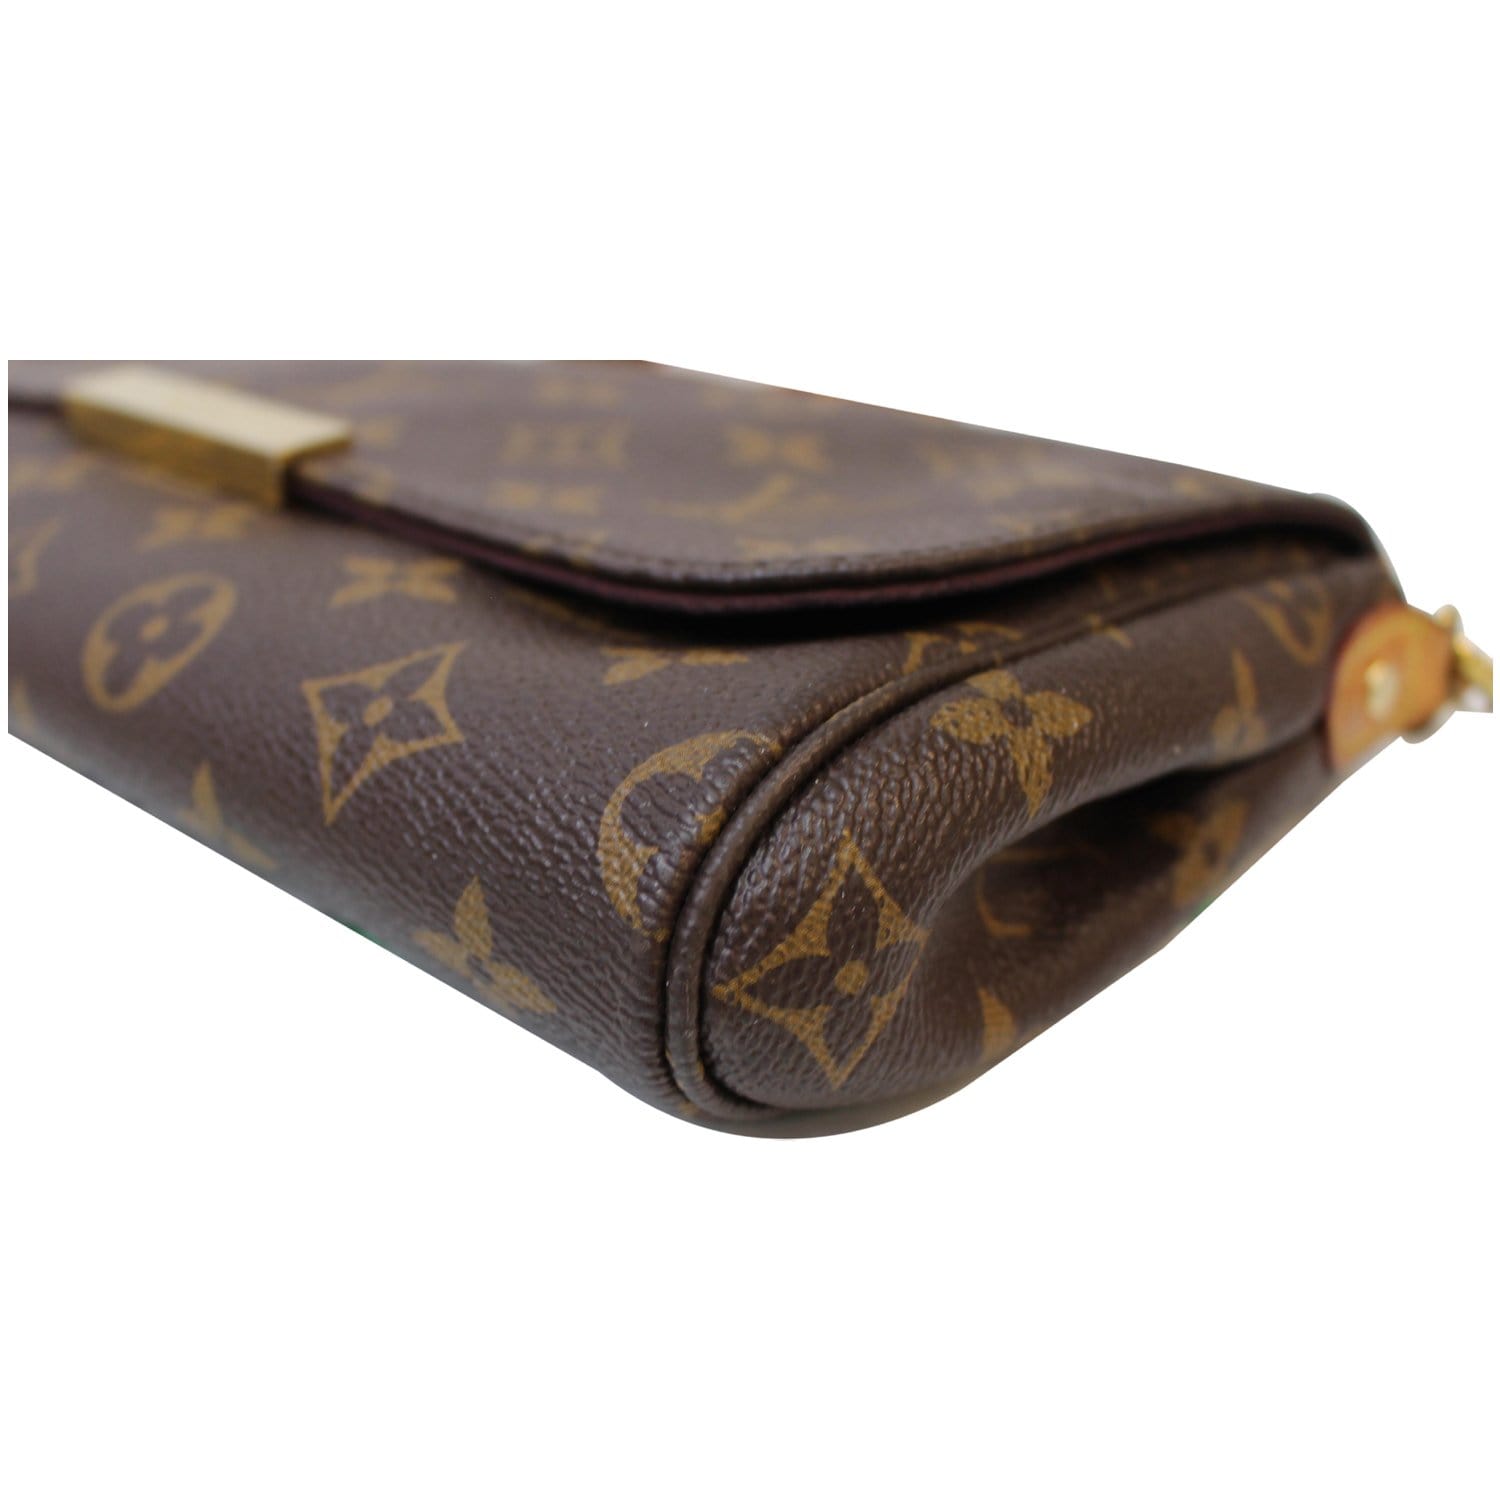 Louis Vuitton Favorite MM Monogram Canvas Cluth Bag Handbag Article: M40718  Made in France